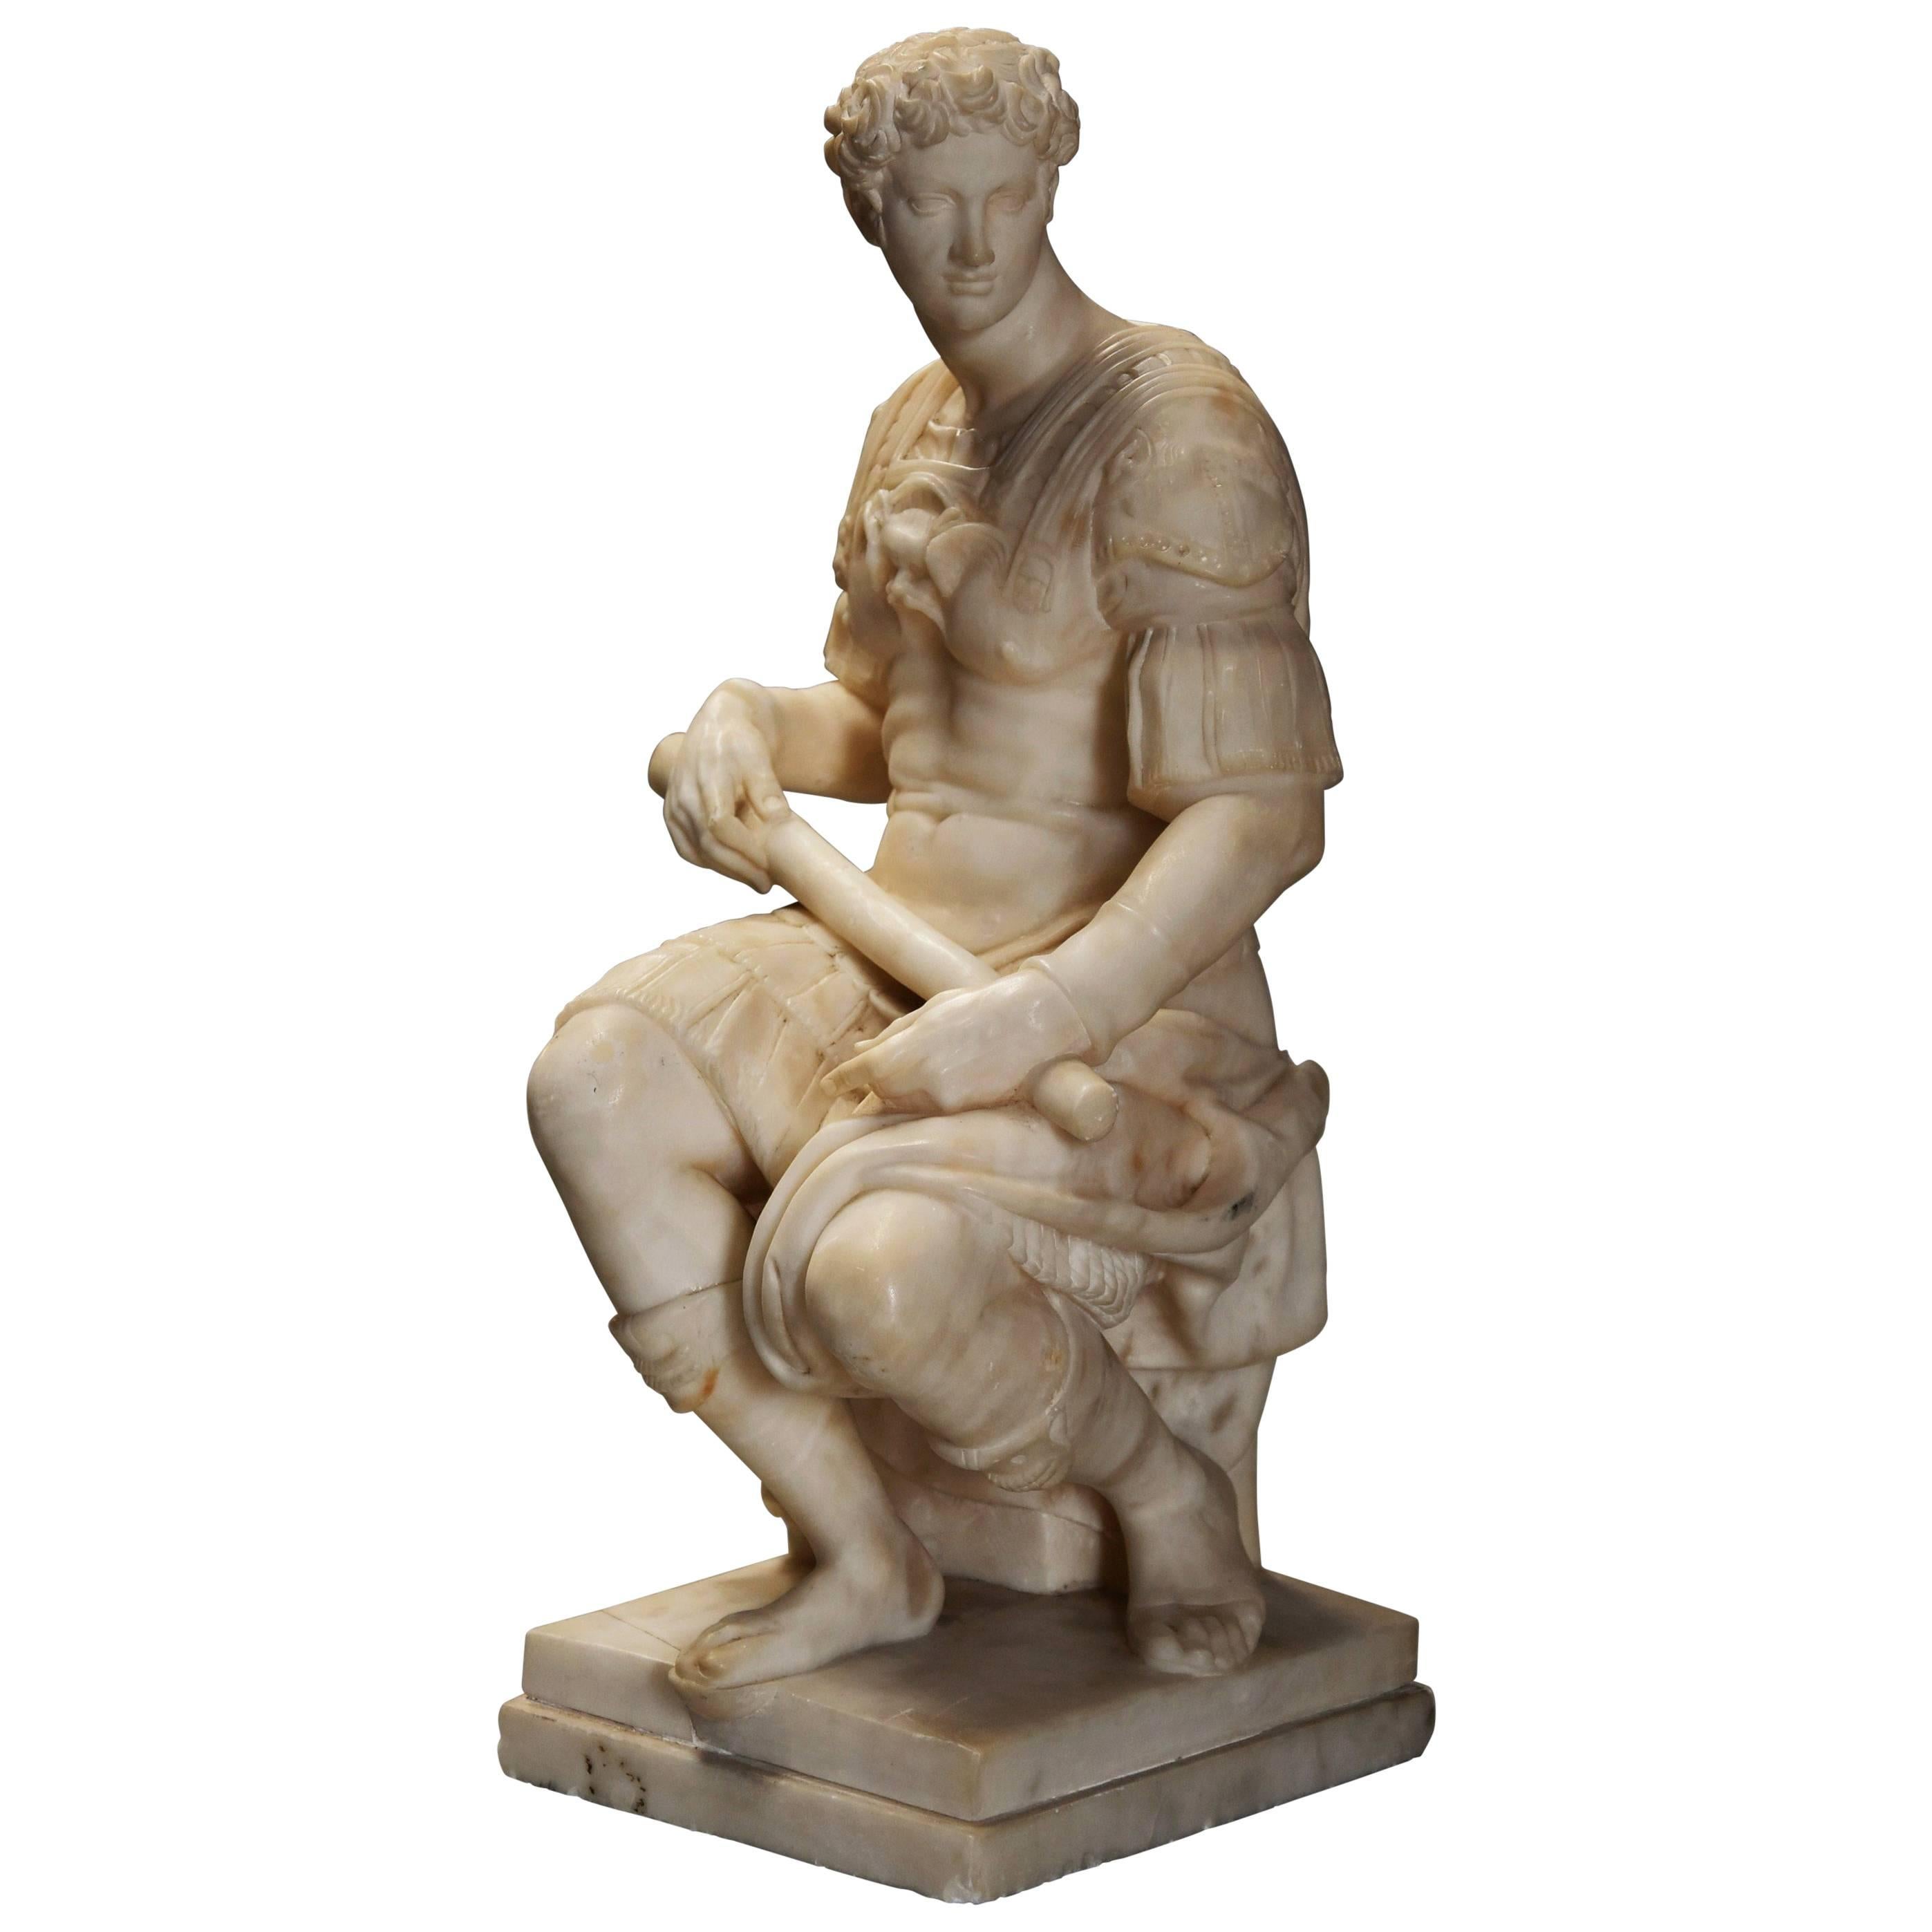 19th Century Alabaster Sculpture of Giuliano De Medici, after the Antique